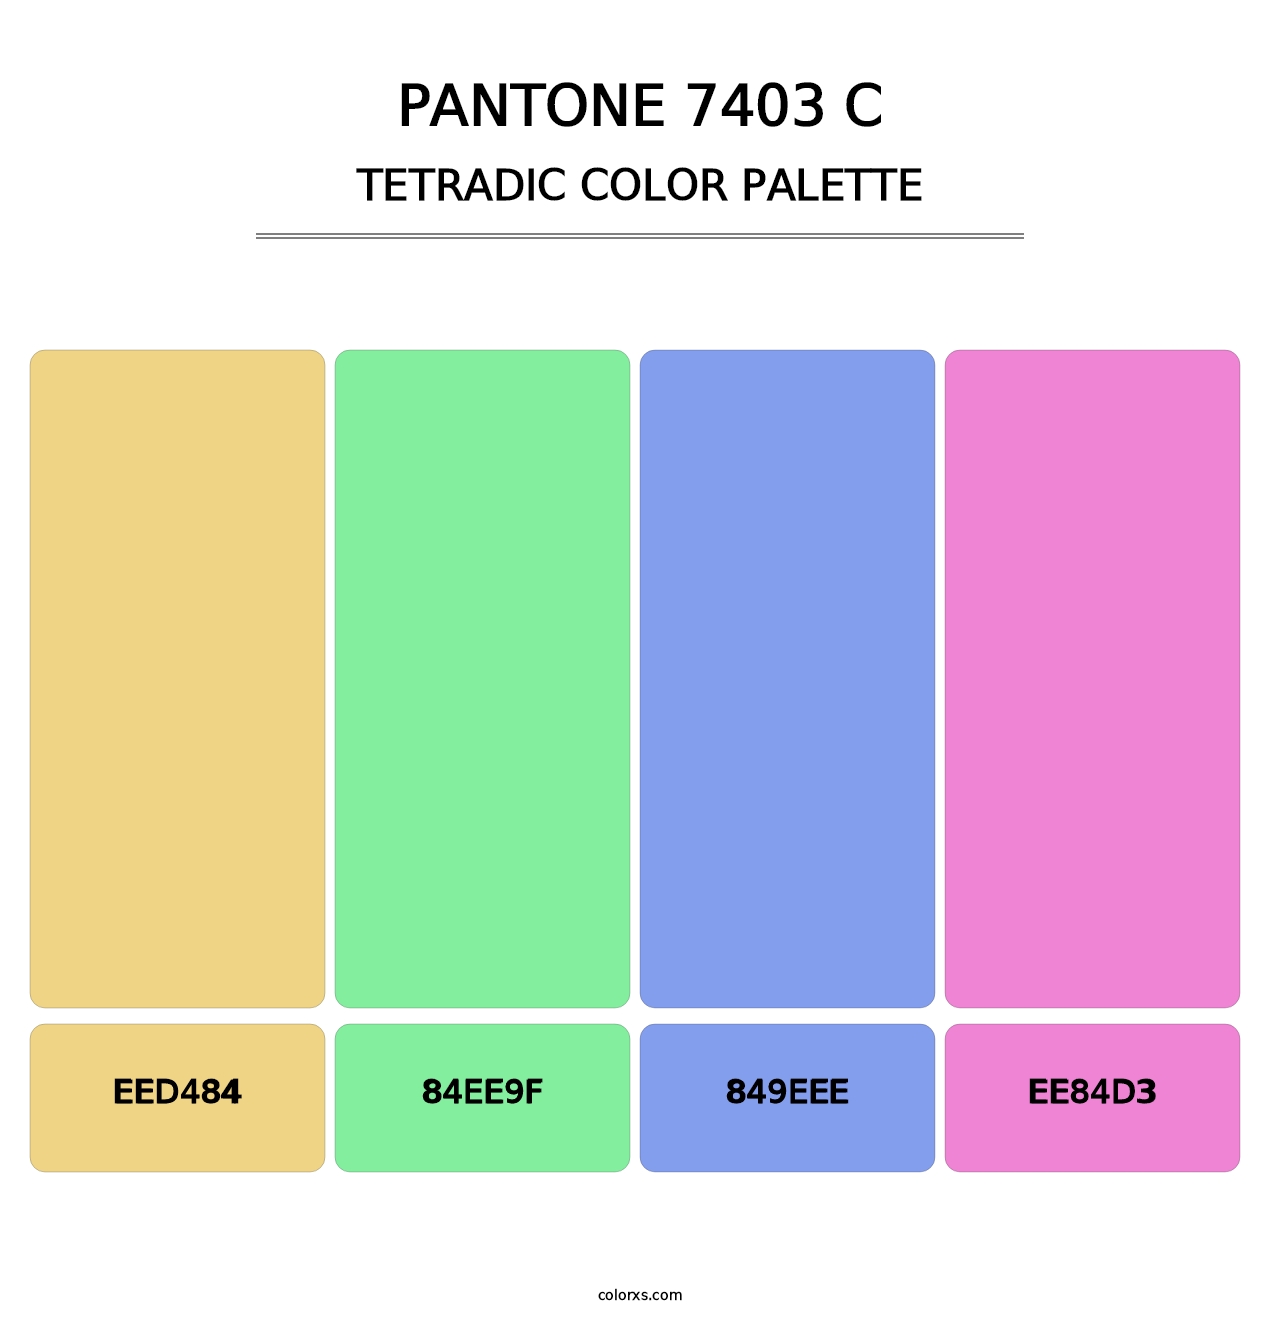 PANTONE 7403 C - Tetradic Color Palette